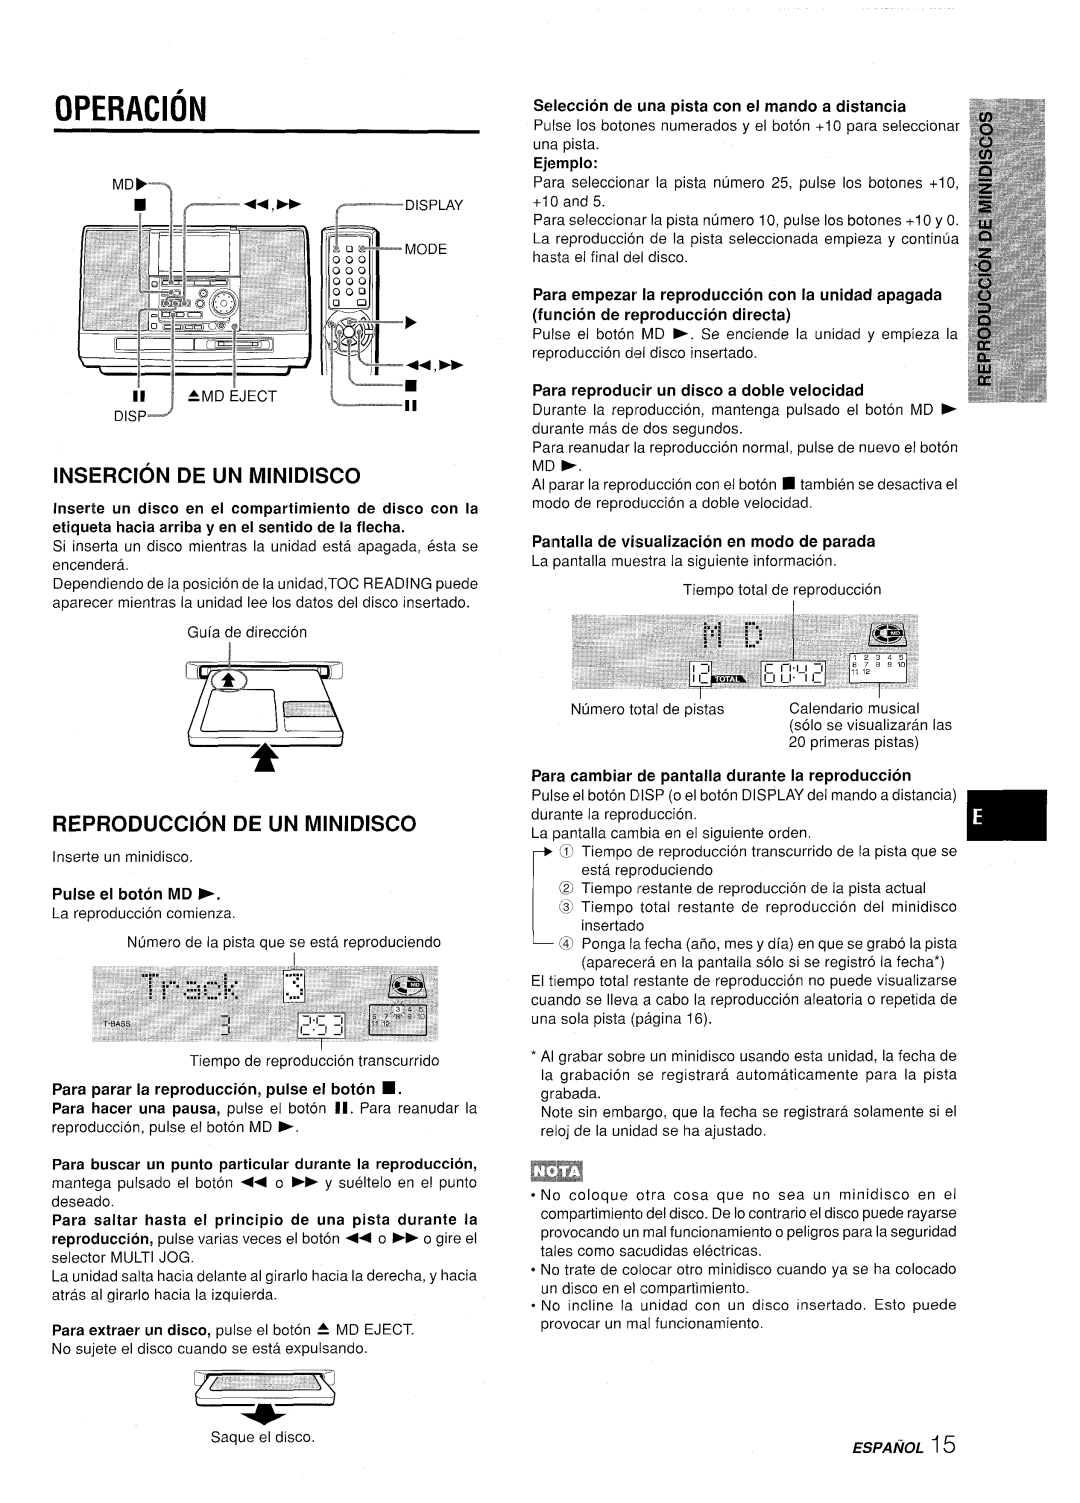 Aiwa CSD-MD50 manual Insercion De Un Minidisco, Reproduction De Un Minidisco, Operacion, Pulse el boton MD p, Ejemplo 